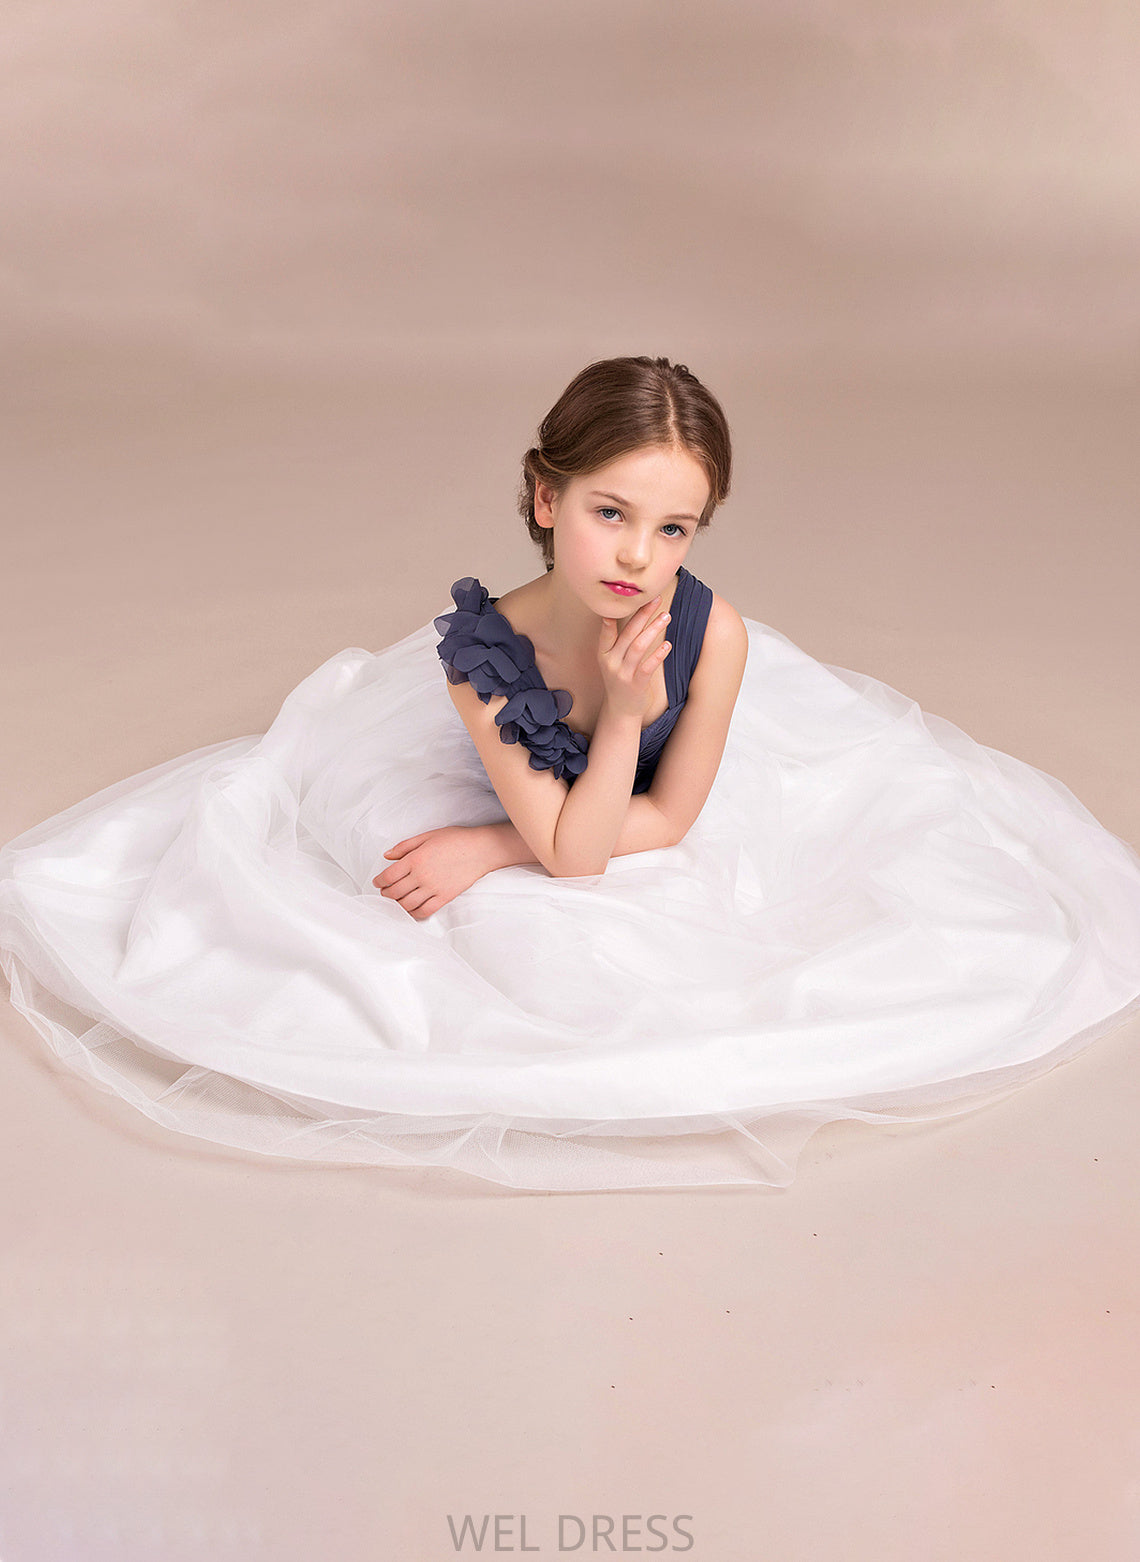 Junior Bridesmaid Dresses Sweetheart With Ruffle Tulle Flower(s) Taniyah Chiffon A-Line Floor-Length